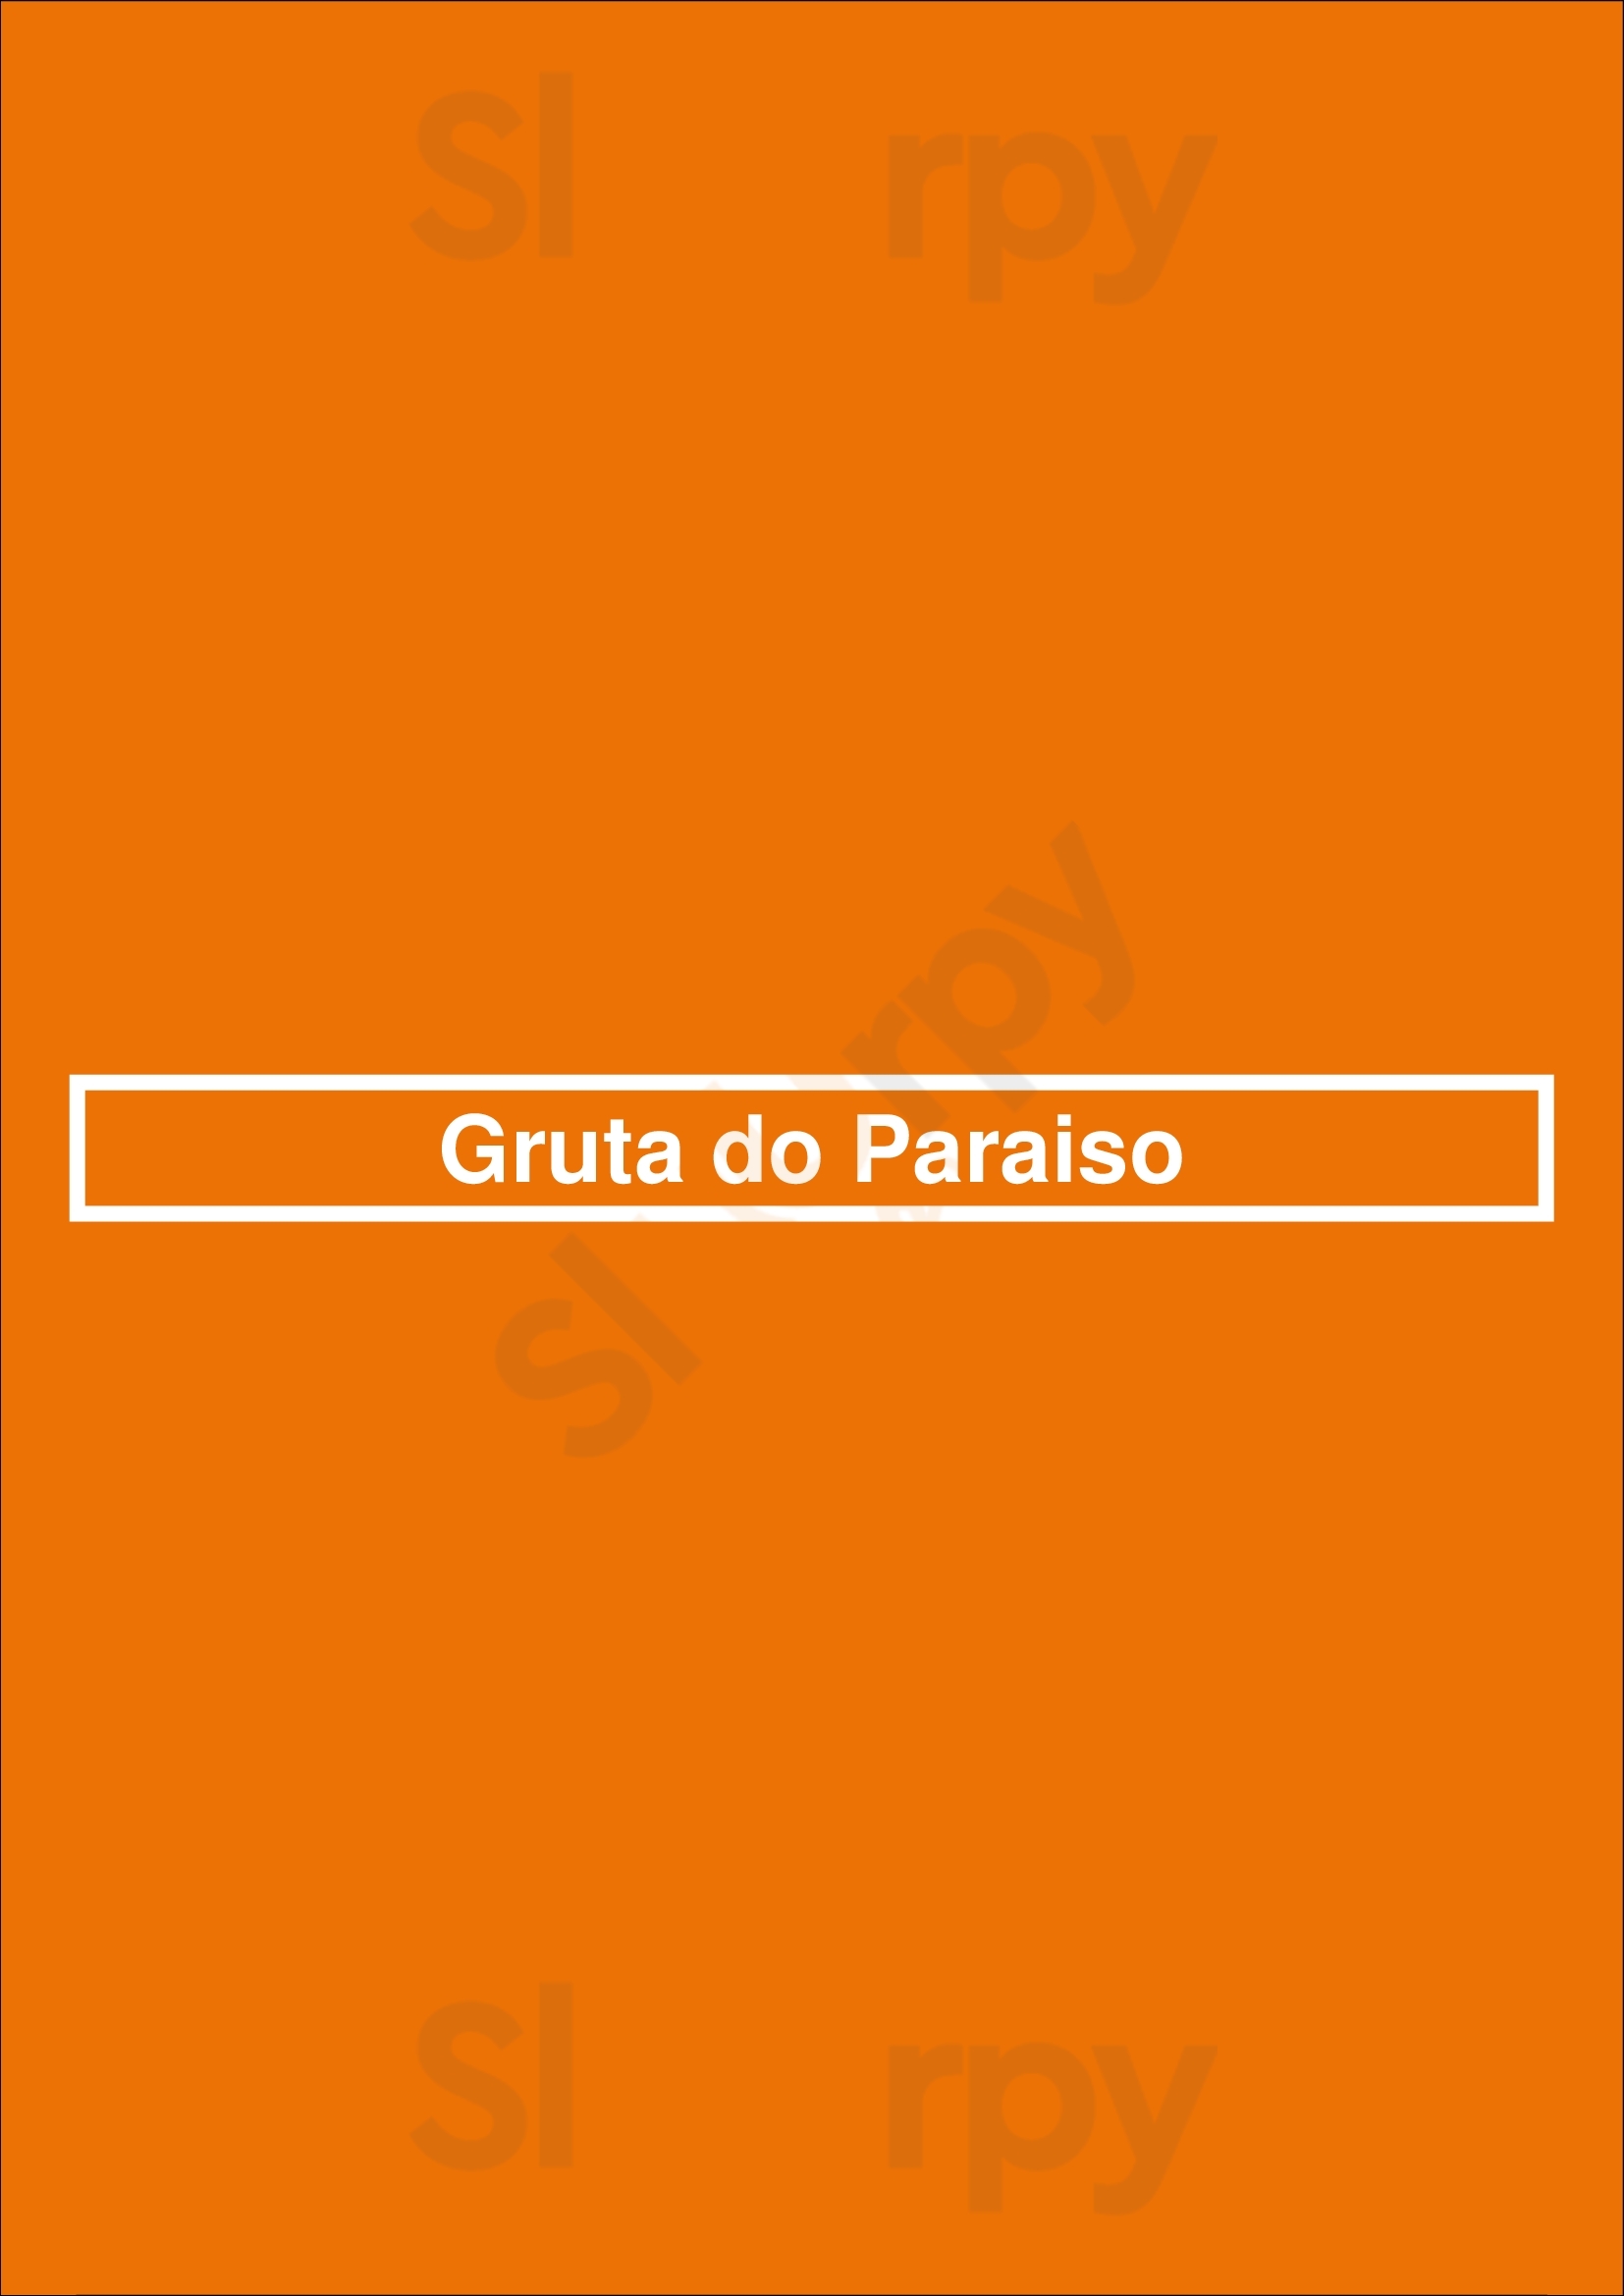 Gruta Do Paraiso Lisboa Menu - 1